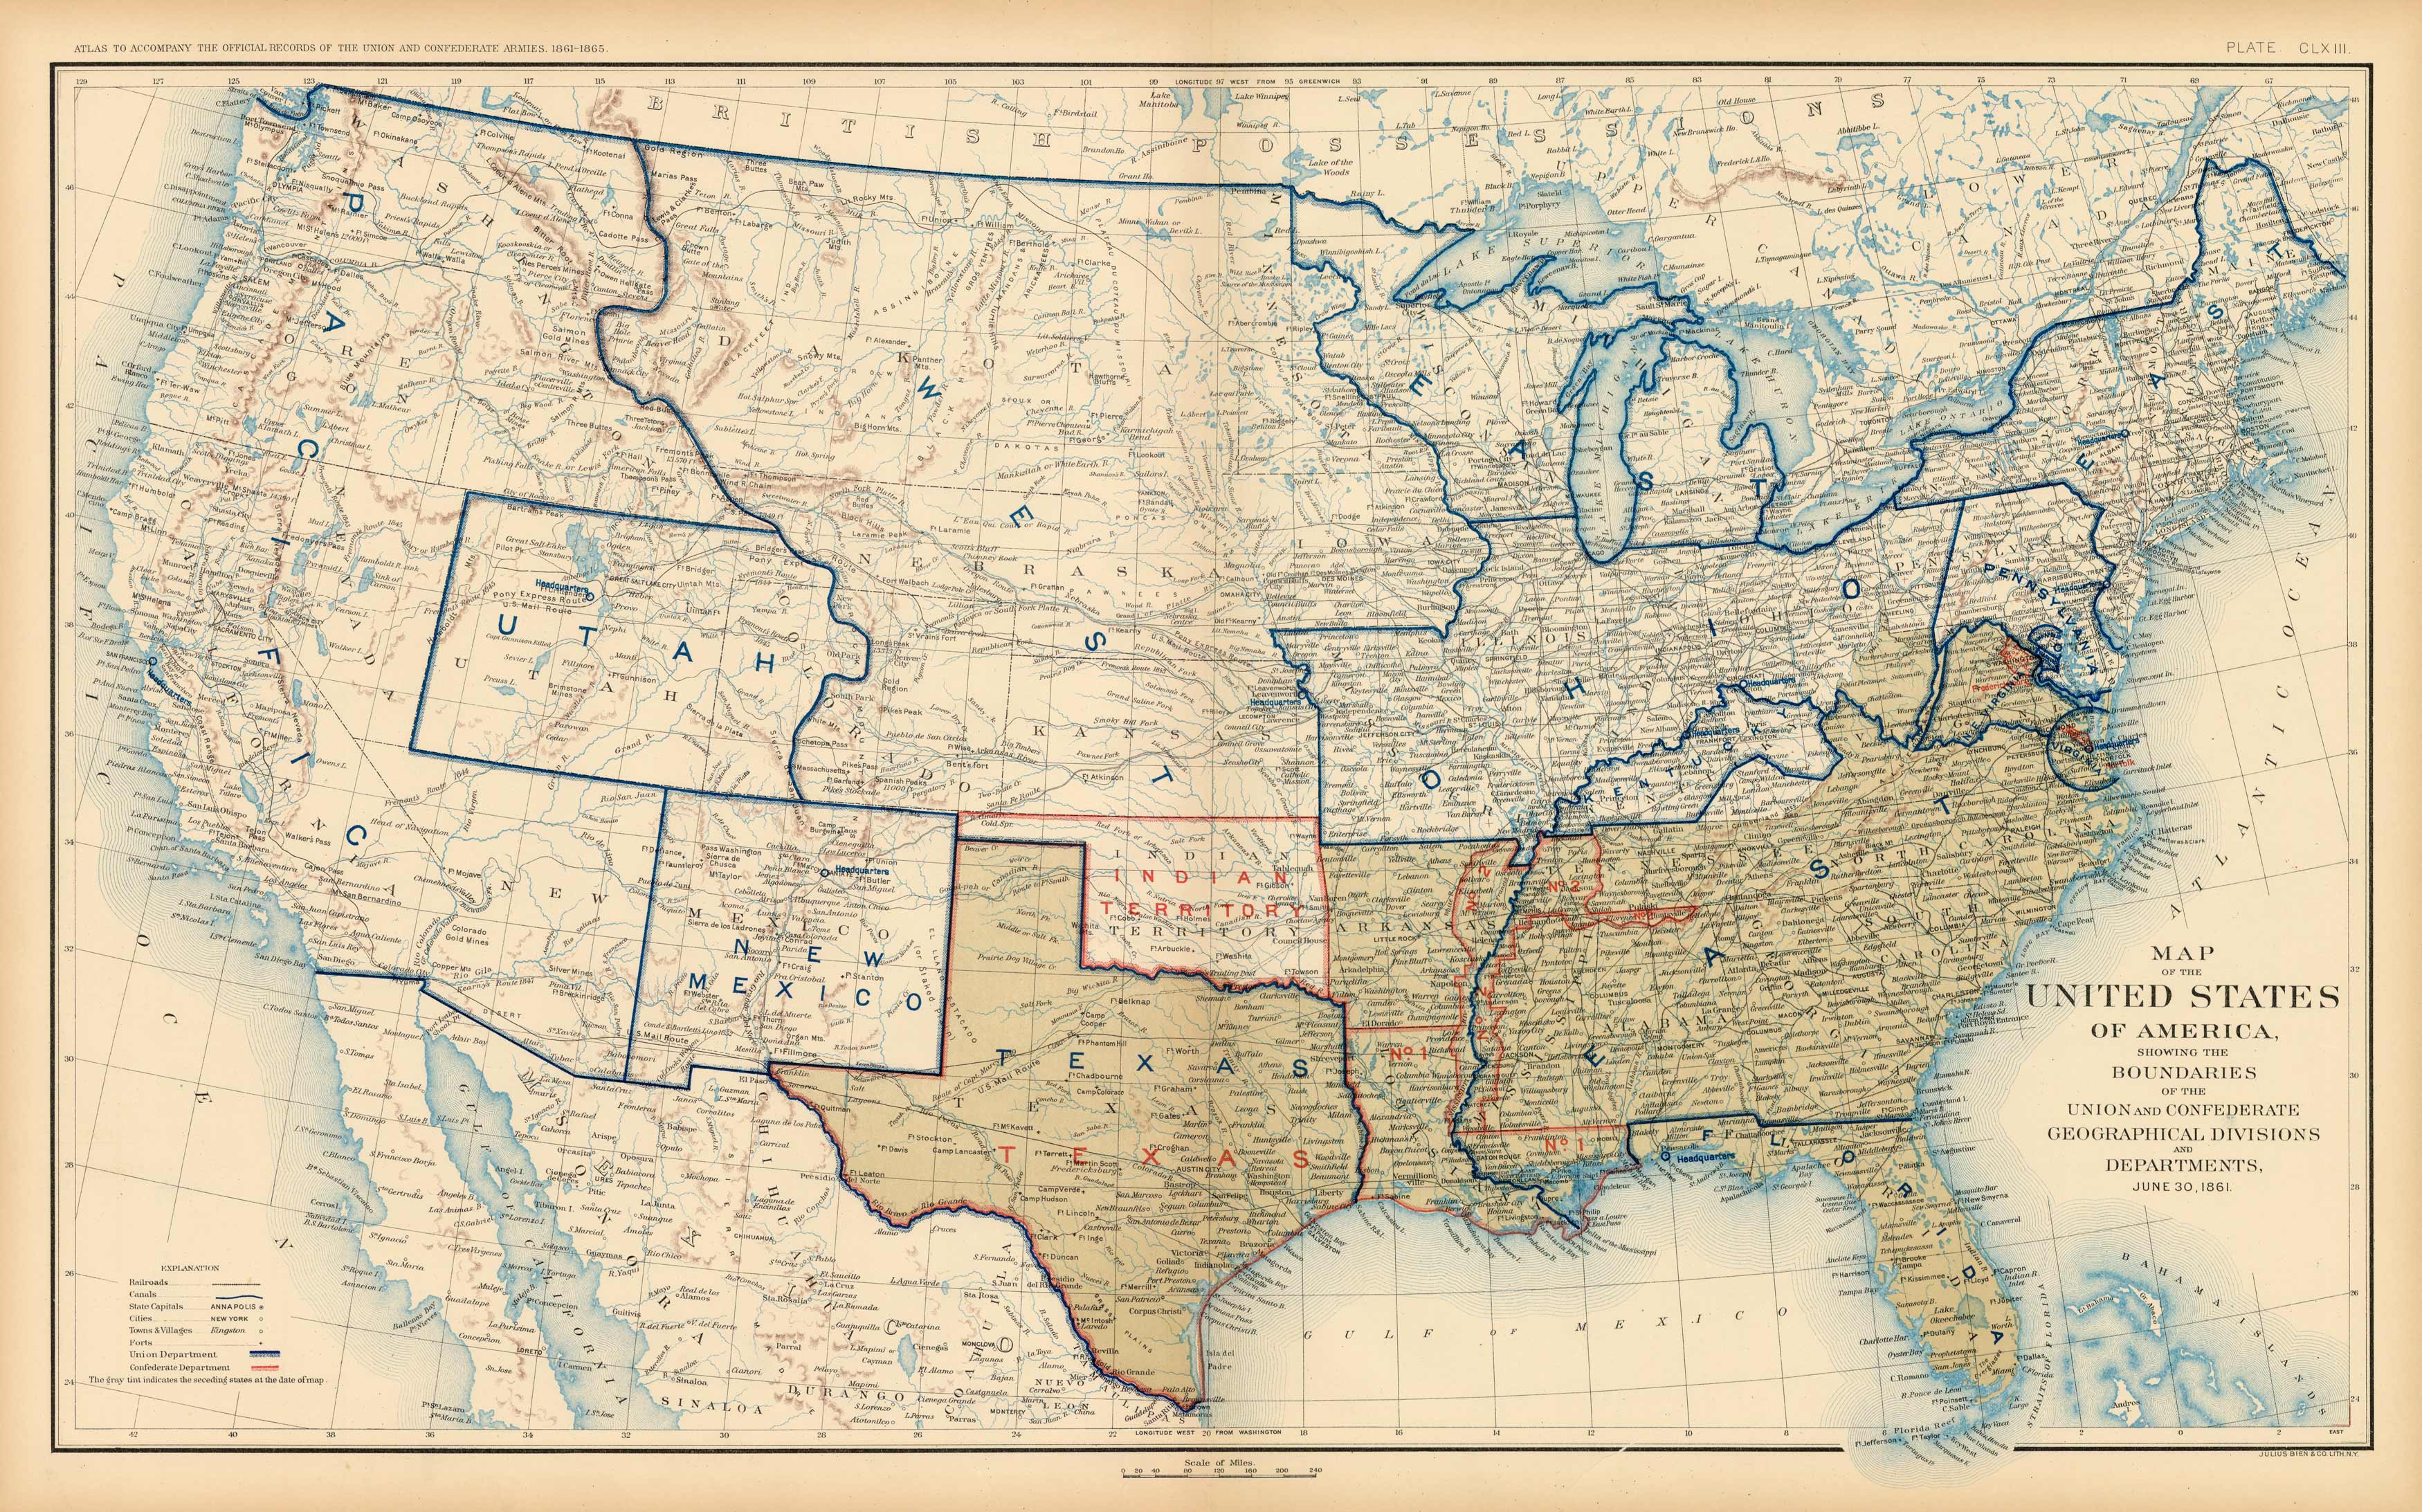 civil war map border states